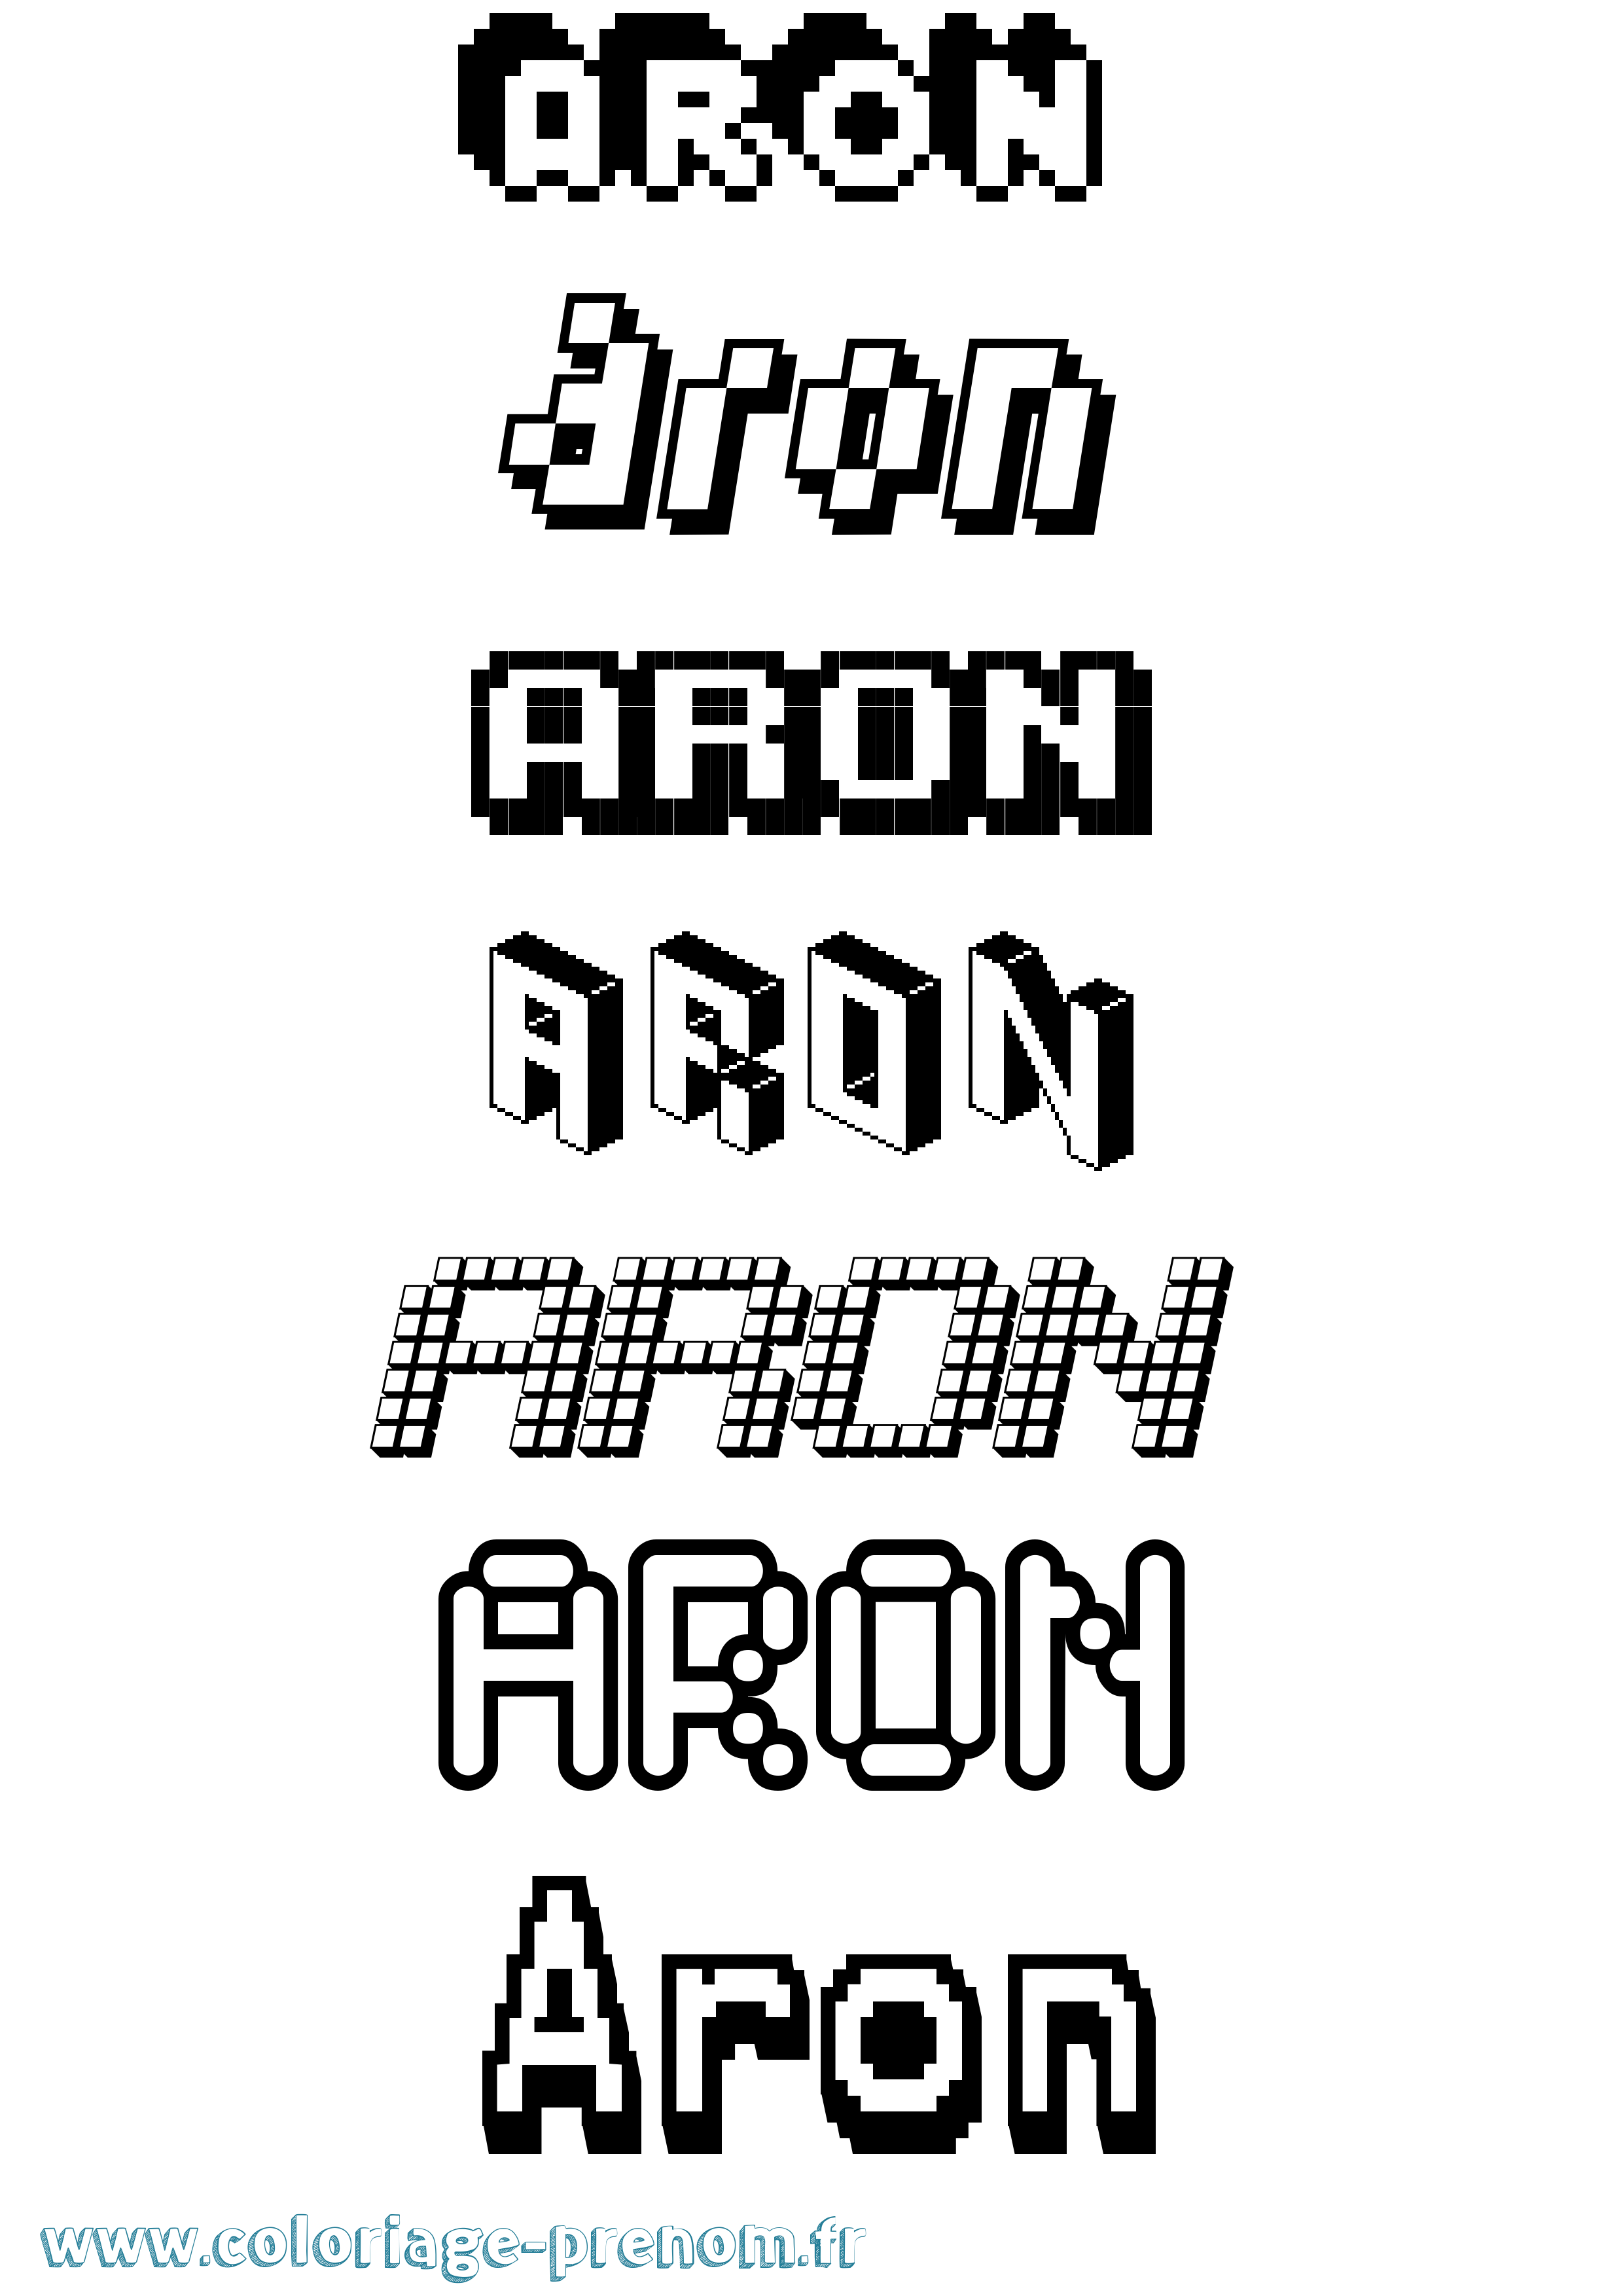 Coloriage prénom Aron Pixel